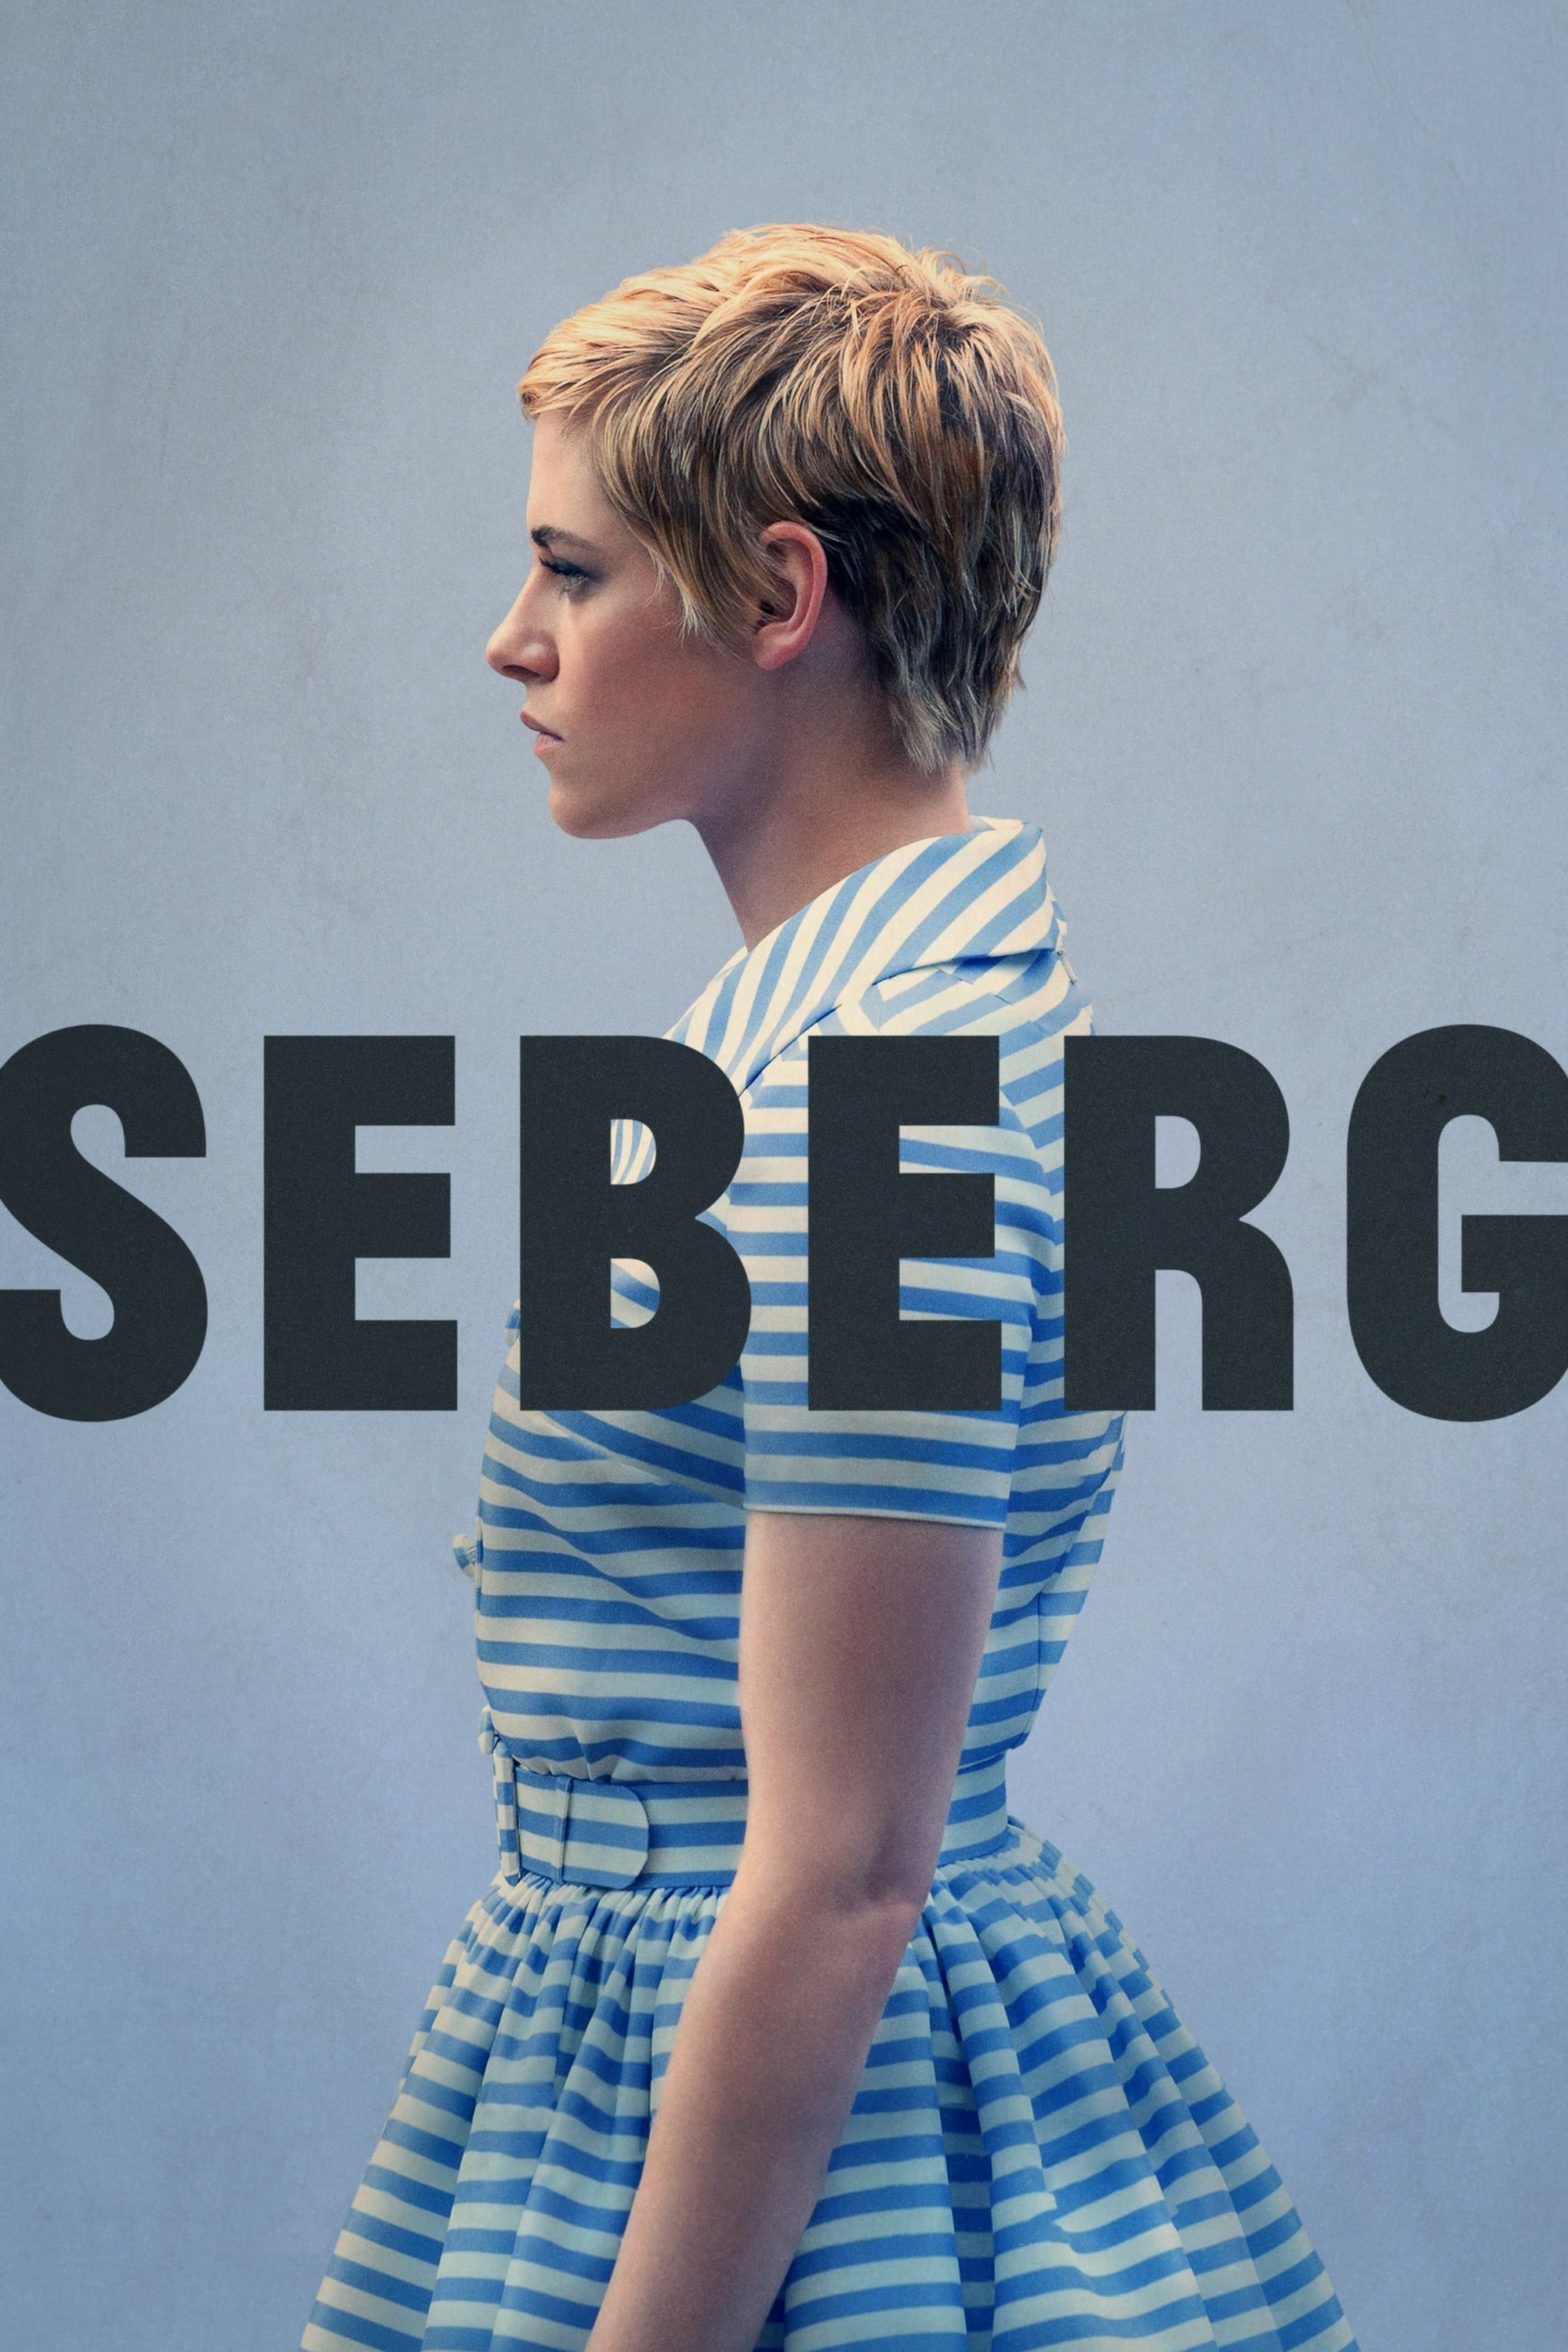 Poster for the movie "Seberg"